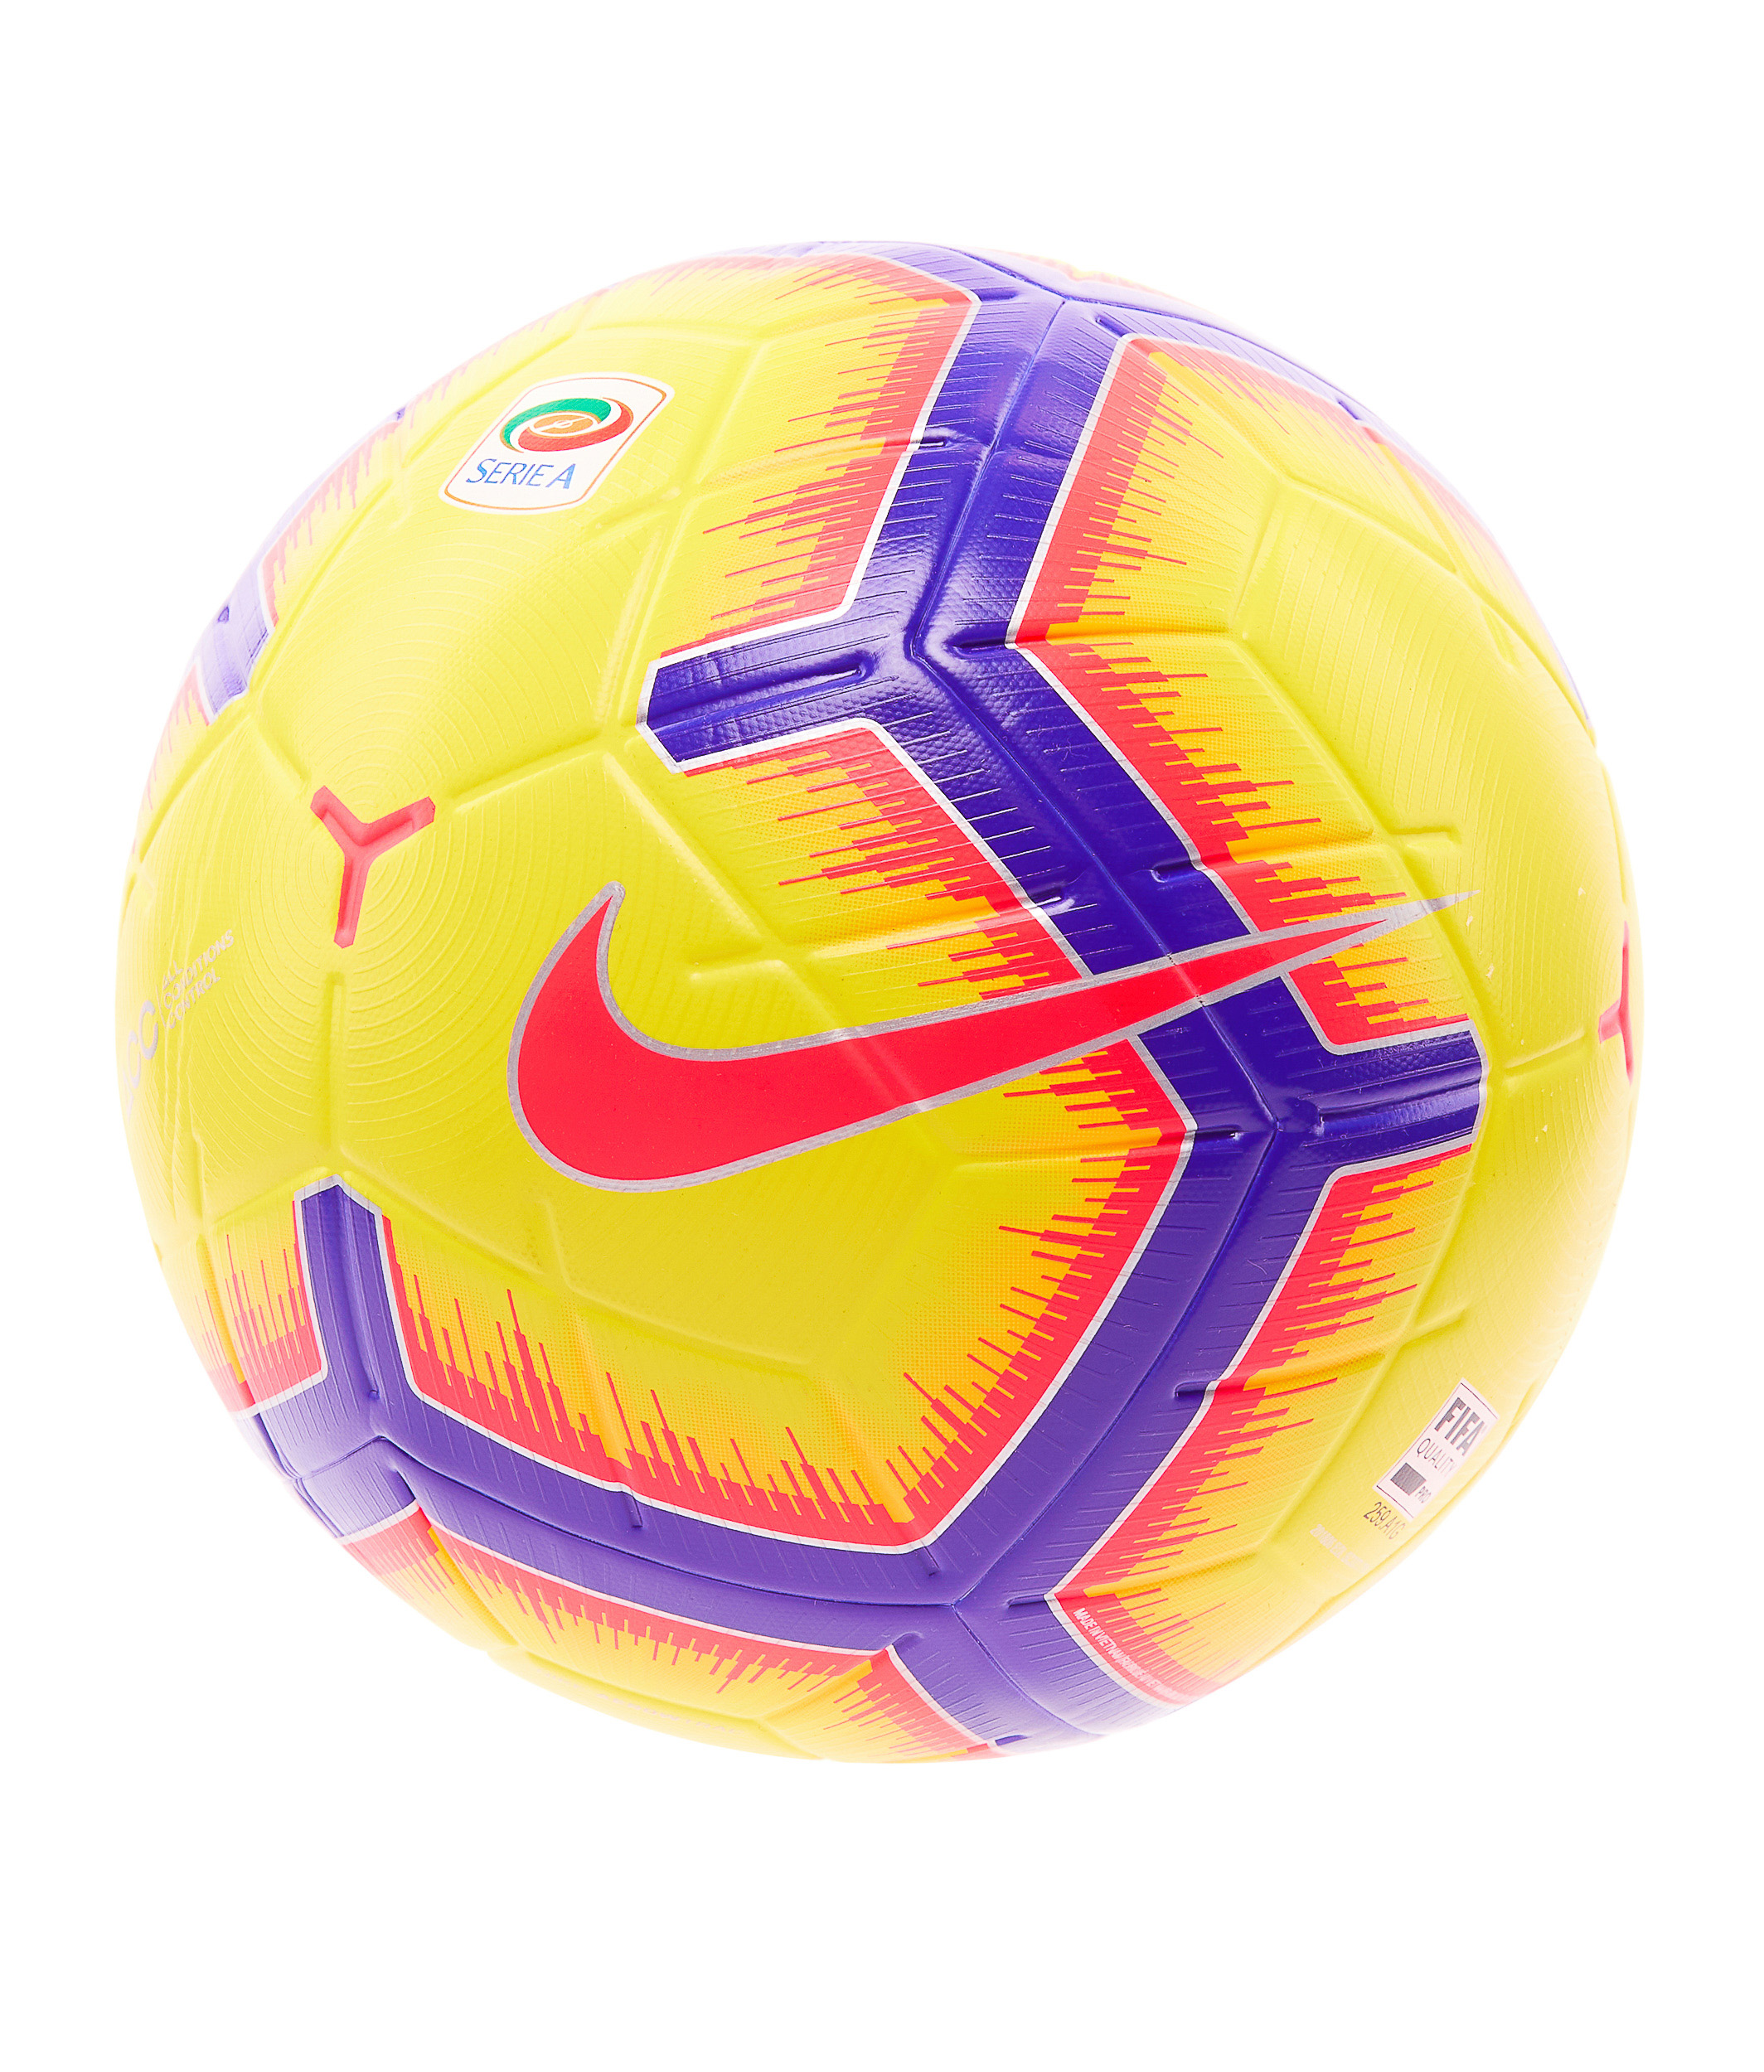 2018-19 Nike Merlin Official Serie A Match Ball - NEW - (Size 5)